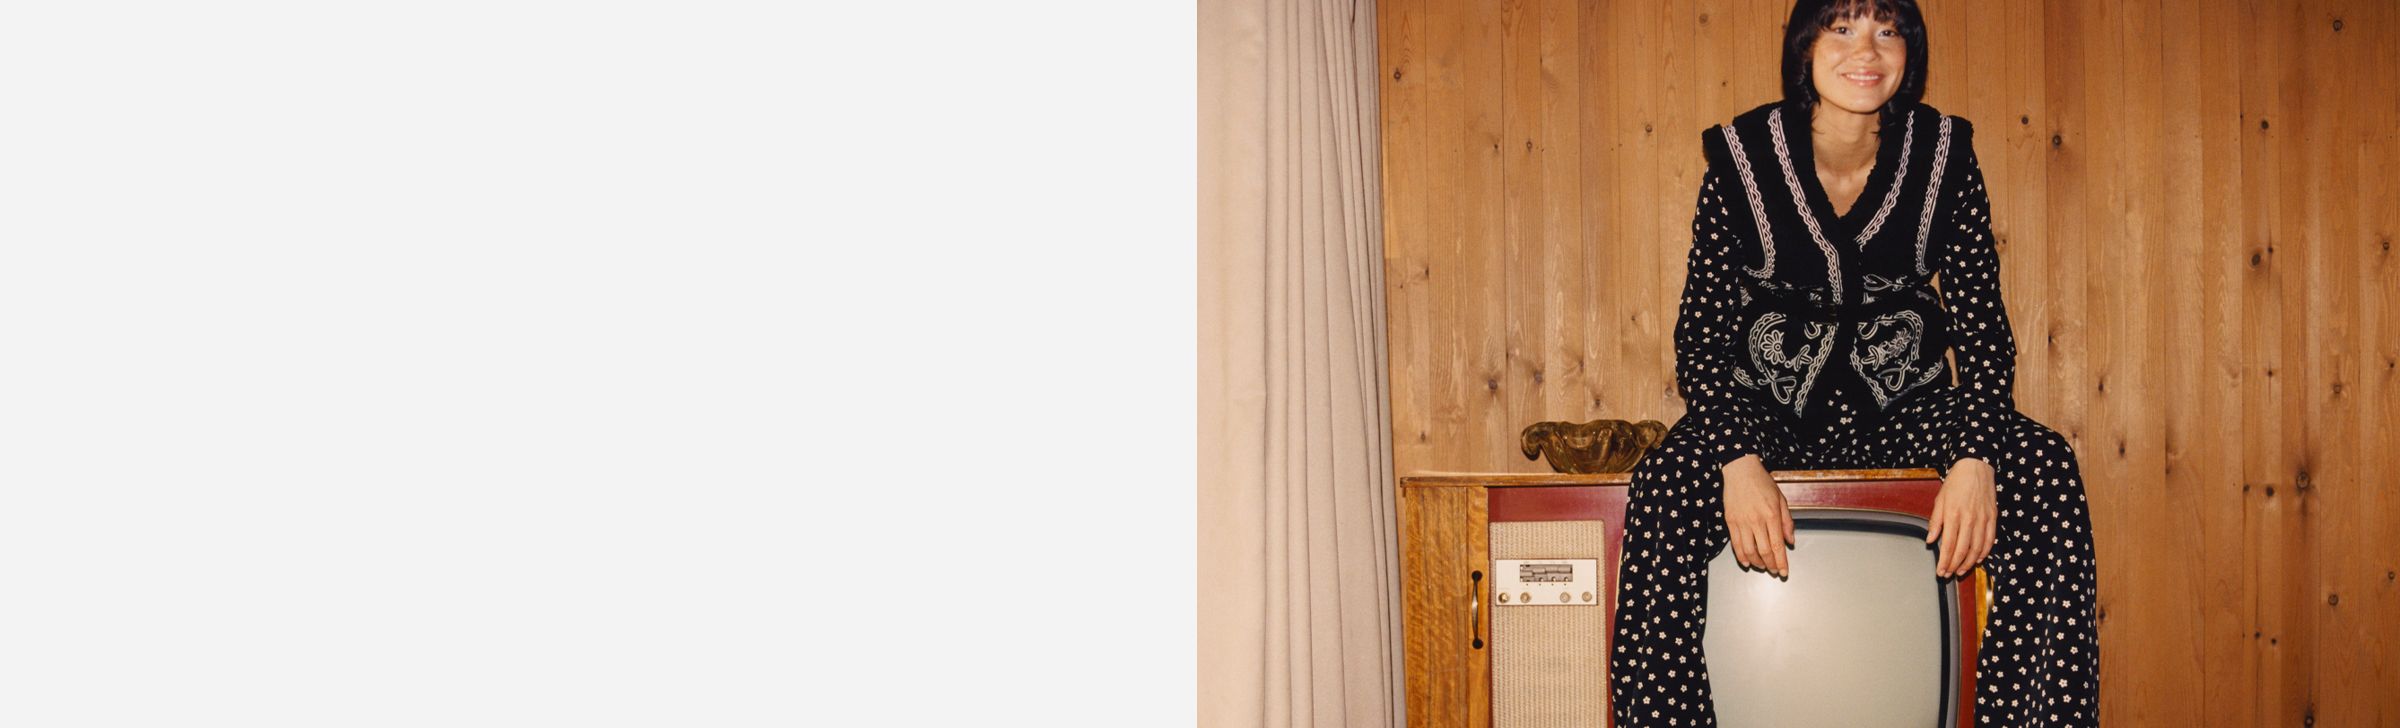 a wonen wearing fabienne_chapot clothing sitting in a wooden room